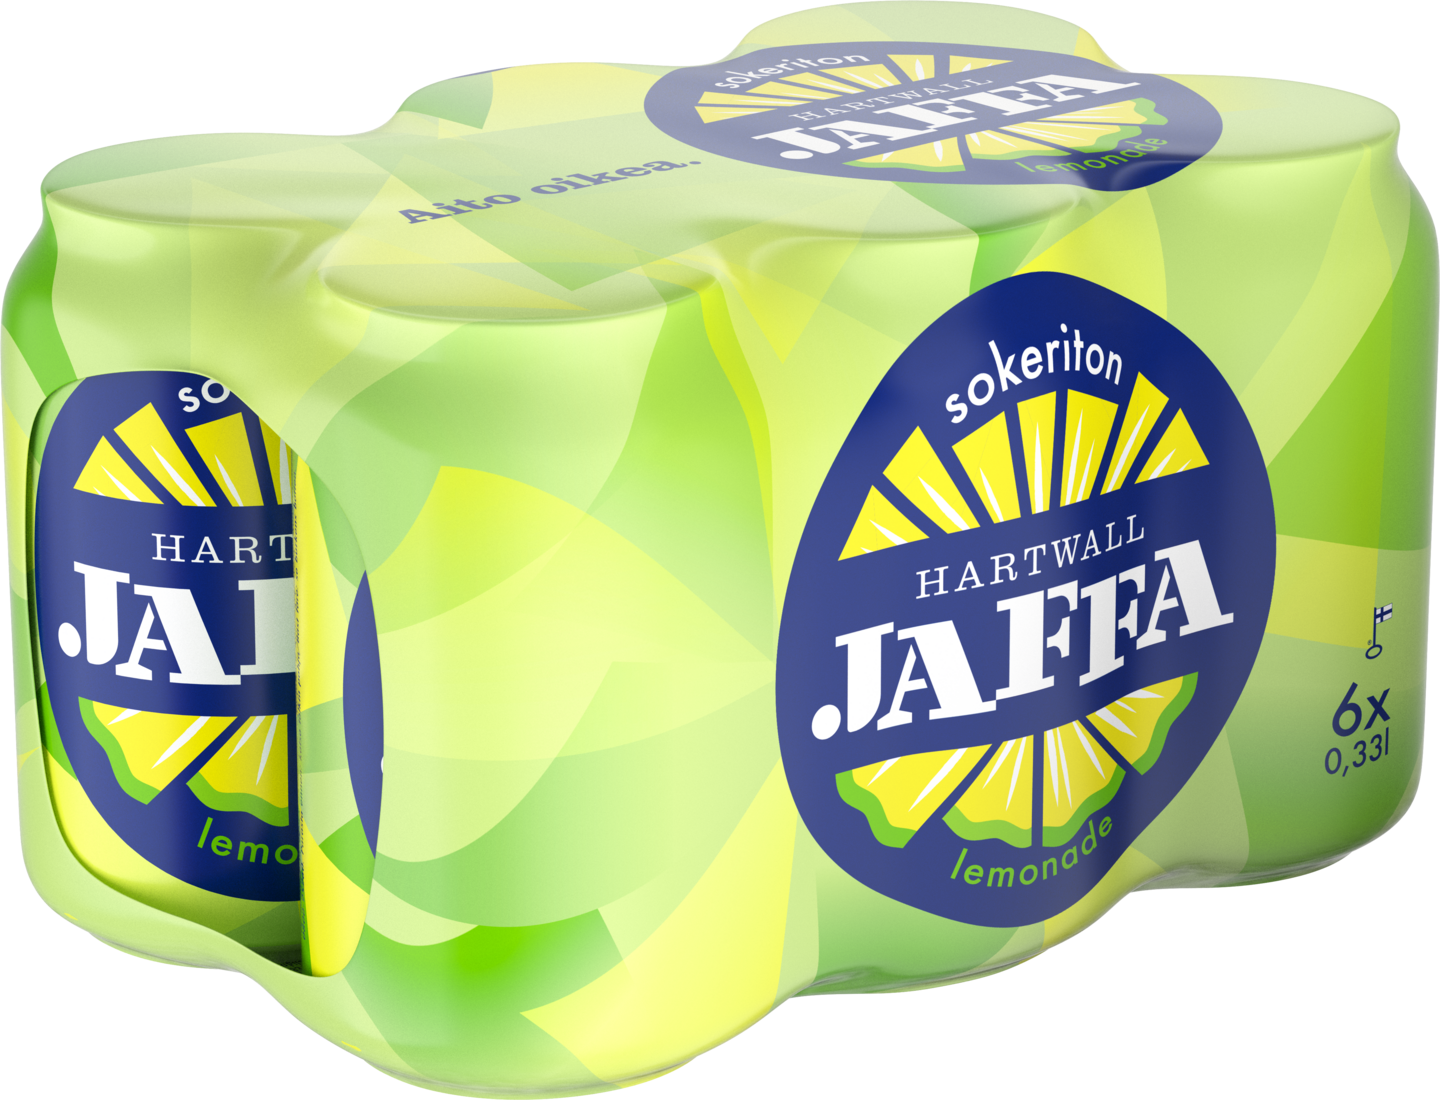 Hartwall Jaffa Lemonade sokeriton virvoitusjuoma 0,33l 6-pack DOLLY